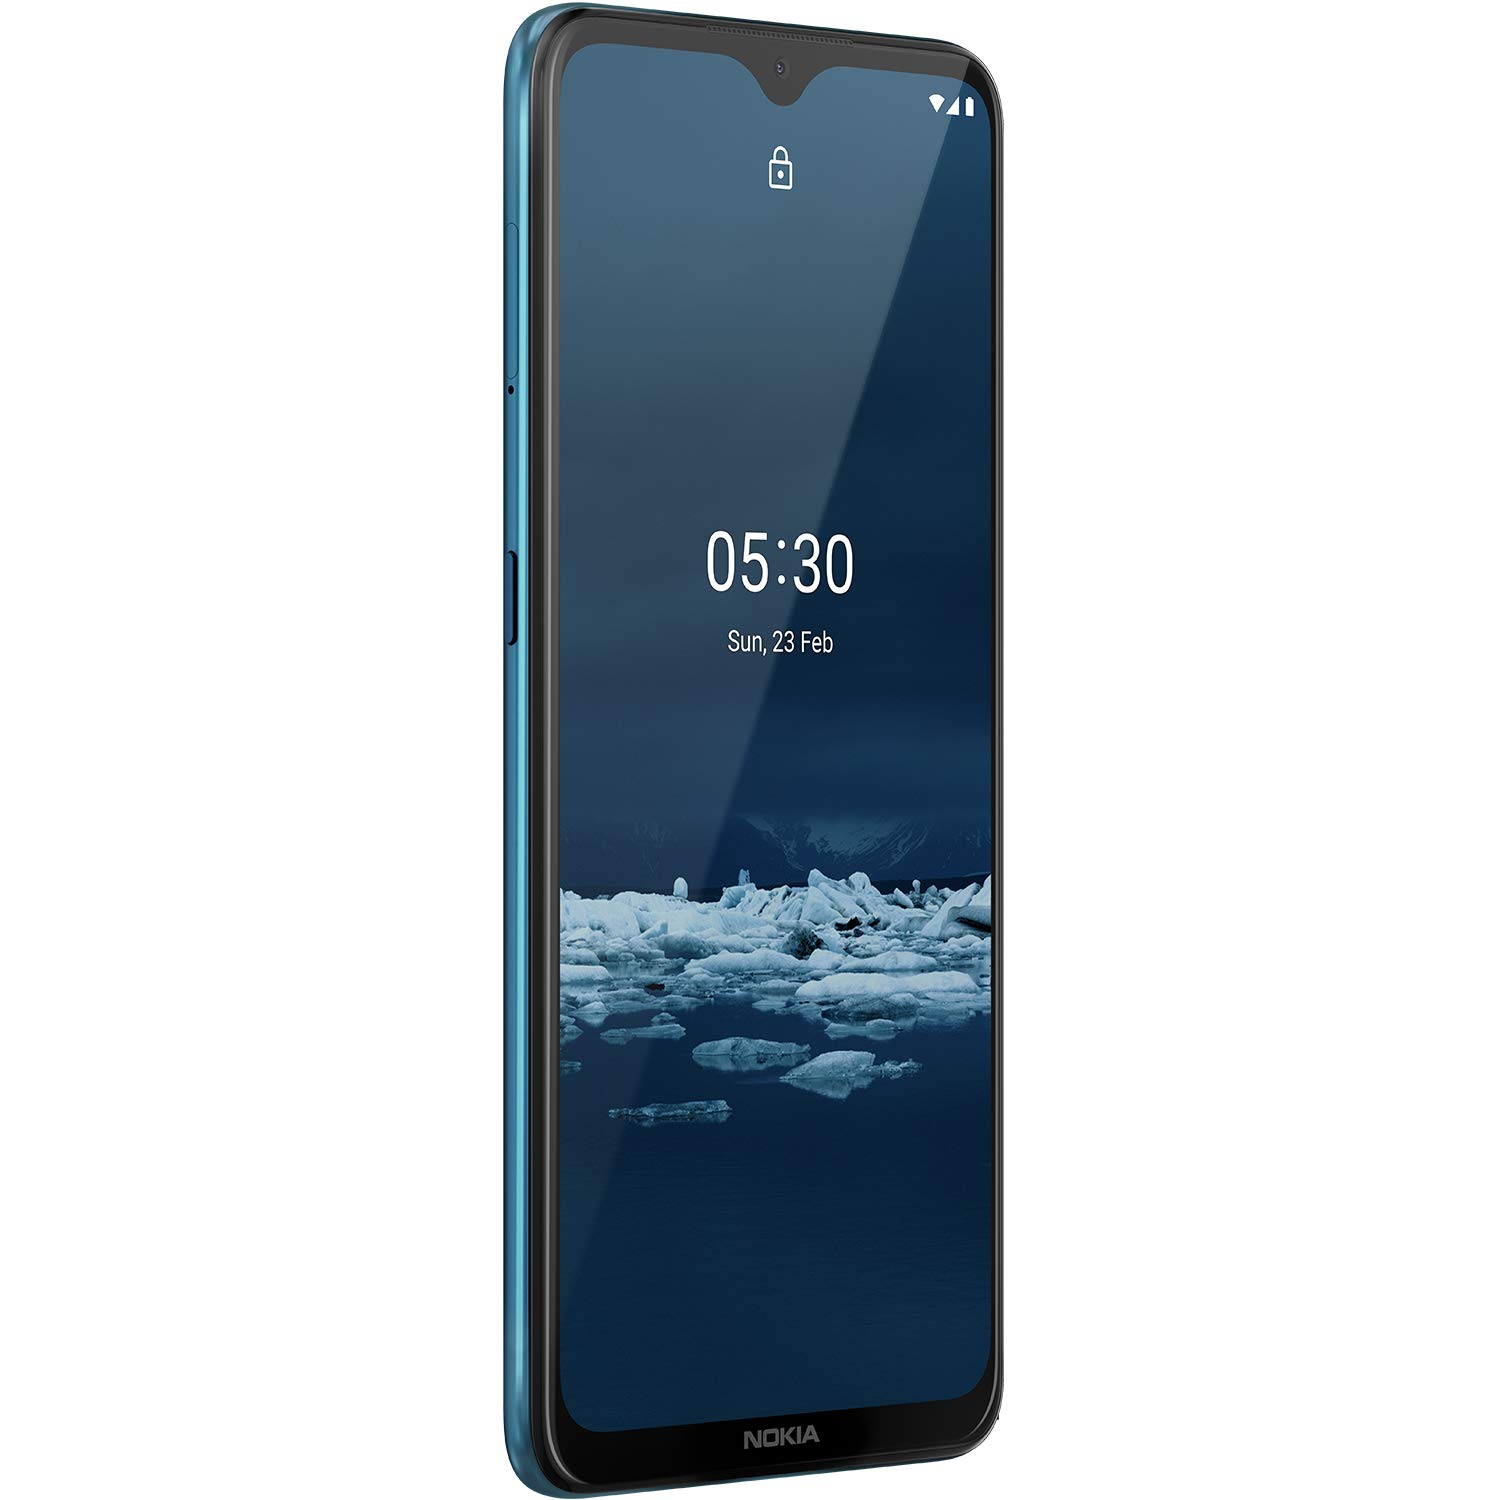 Nokia 5.3 Fully Unlocked Smartphone with 6.55